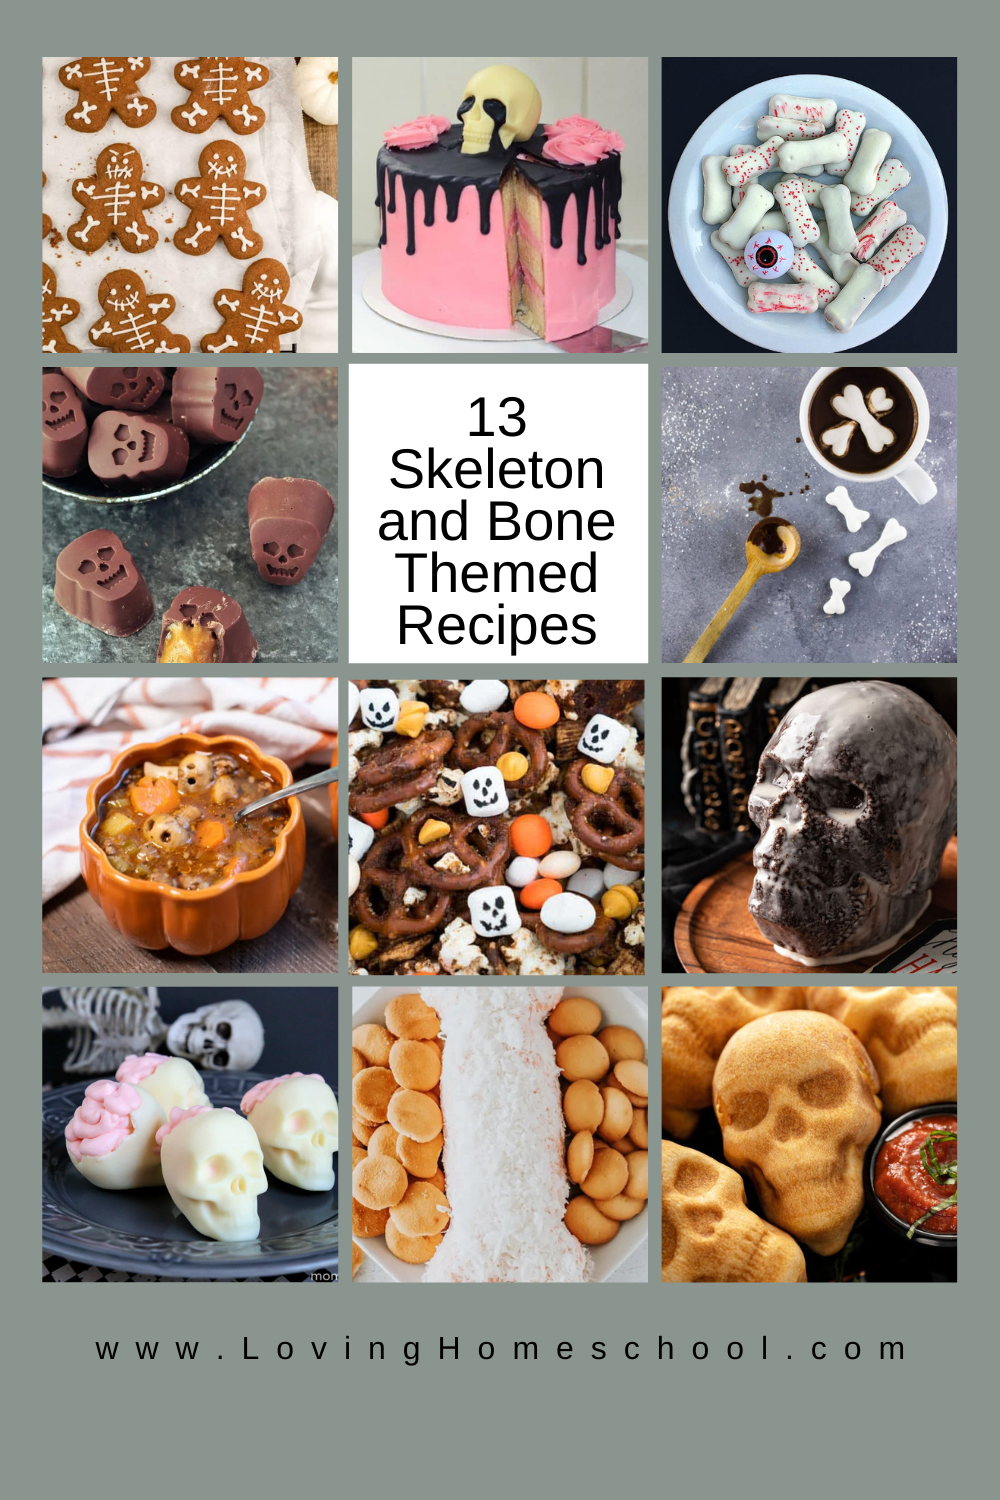 13 Skeleton and Bone Themed Recipes Pinterest Pin